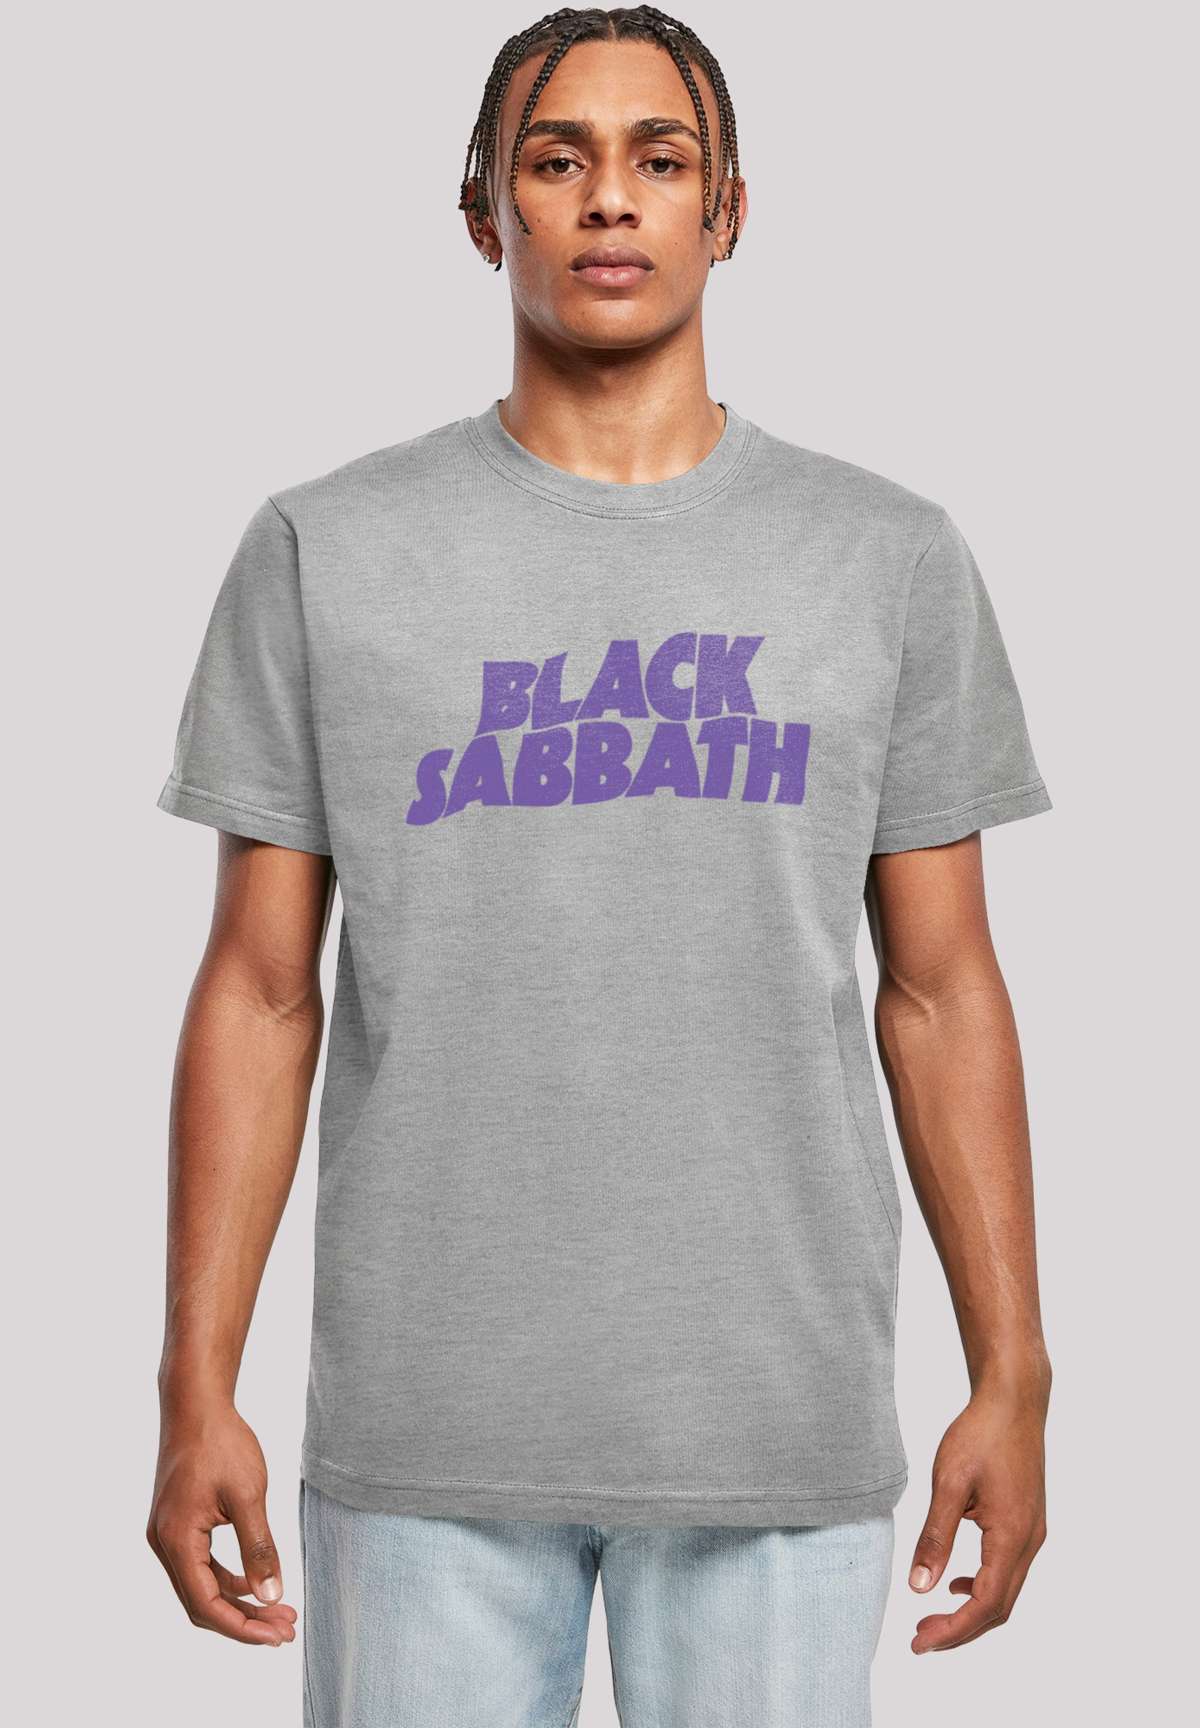 Футболка BLACK SABBATH HEAVY METAL BAND WAVY